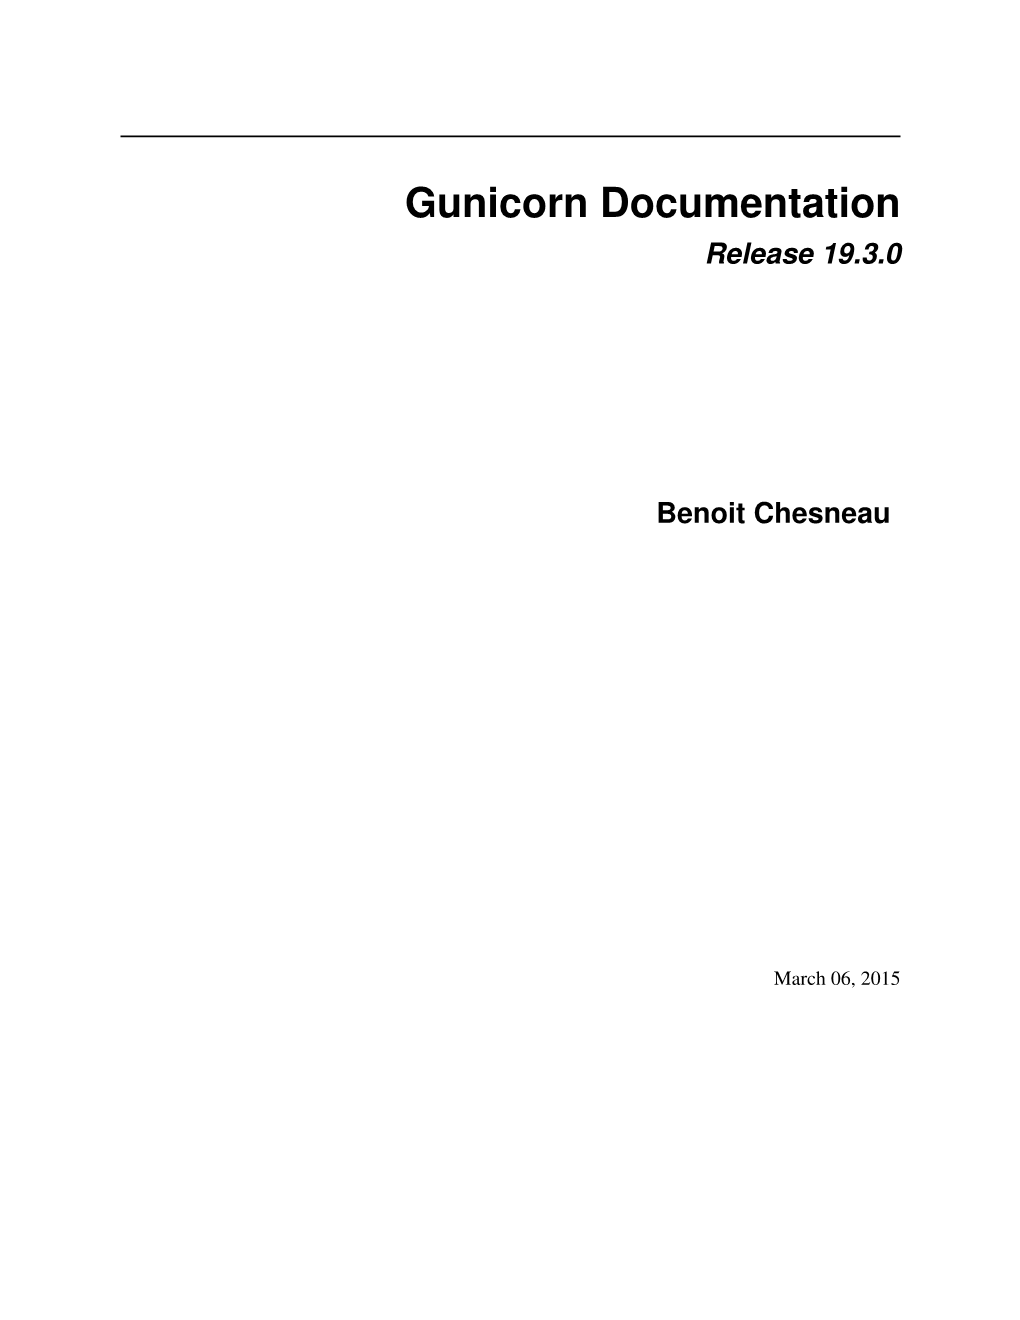 Gunicorn Documentation Release 19.3.0